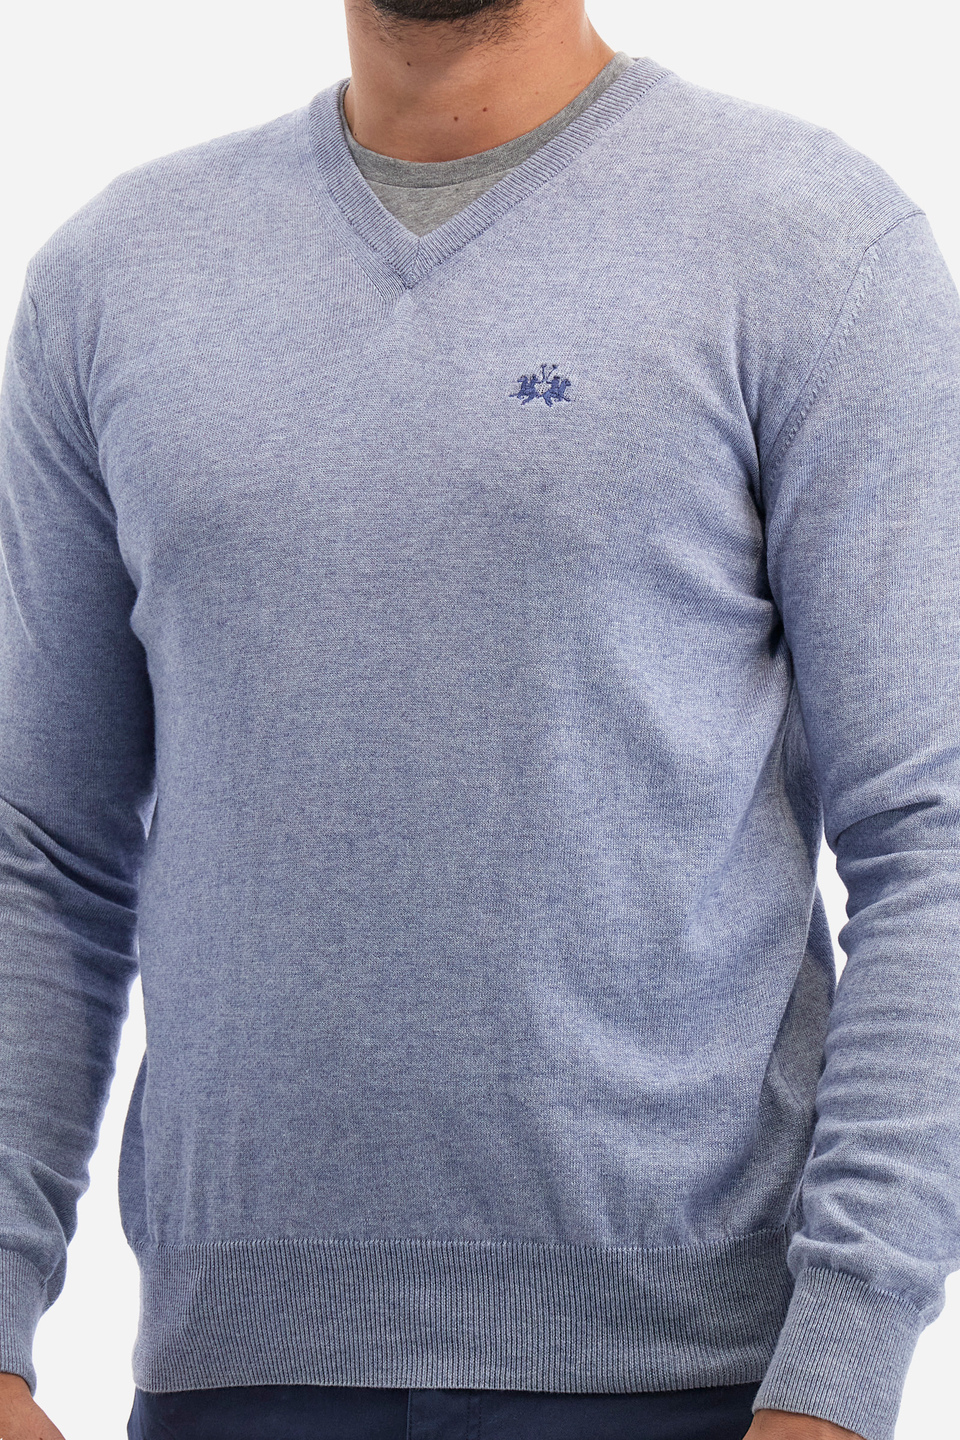 Brahma - Página Oficial - SWE0104-GRI Sweater Hombre